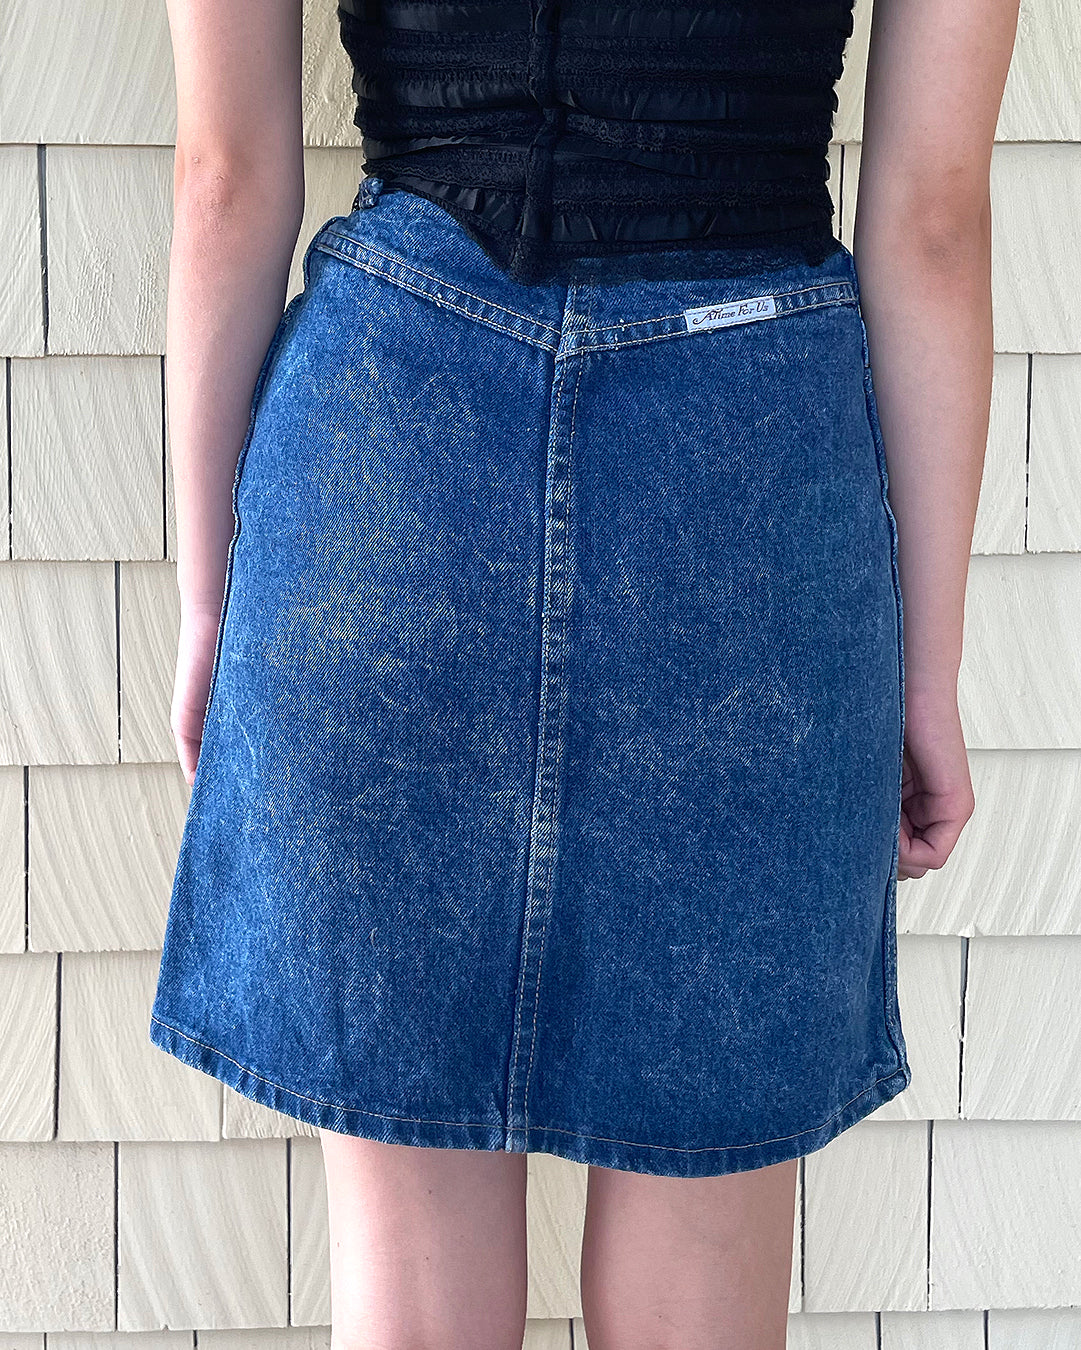 SALE Denim Skirt XS 1980s High Waisted Skirt Attached